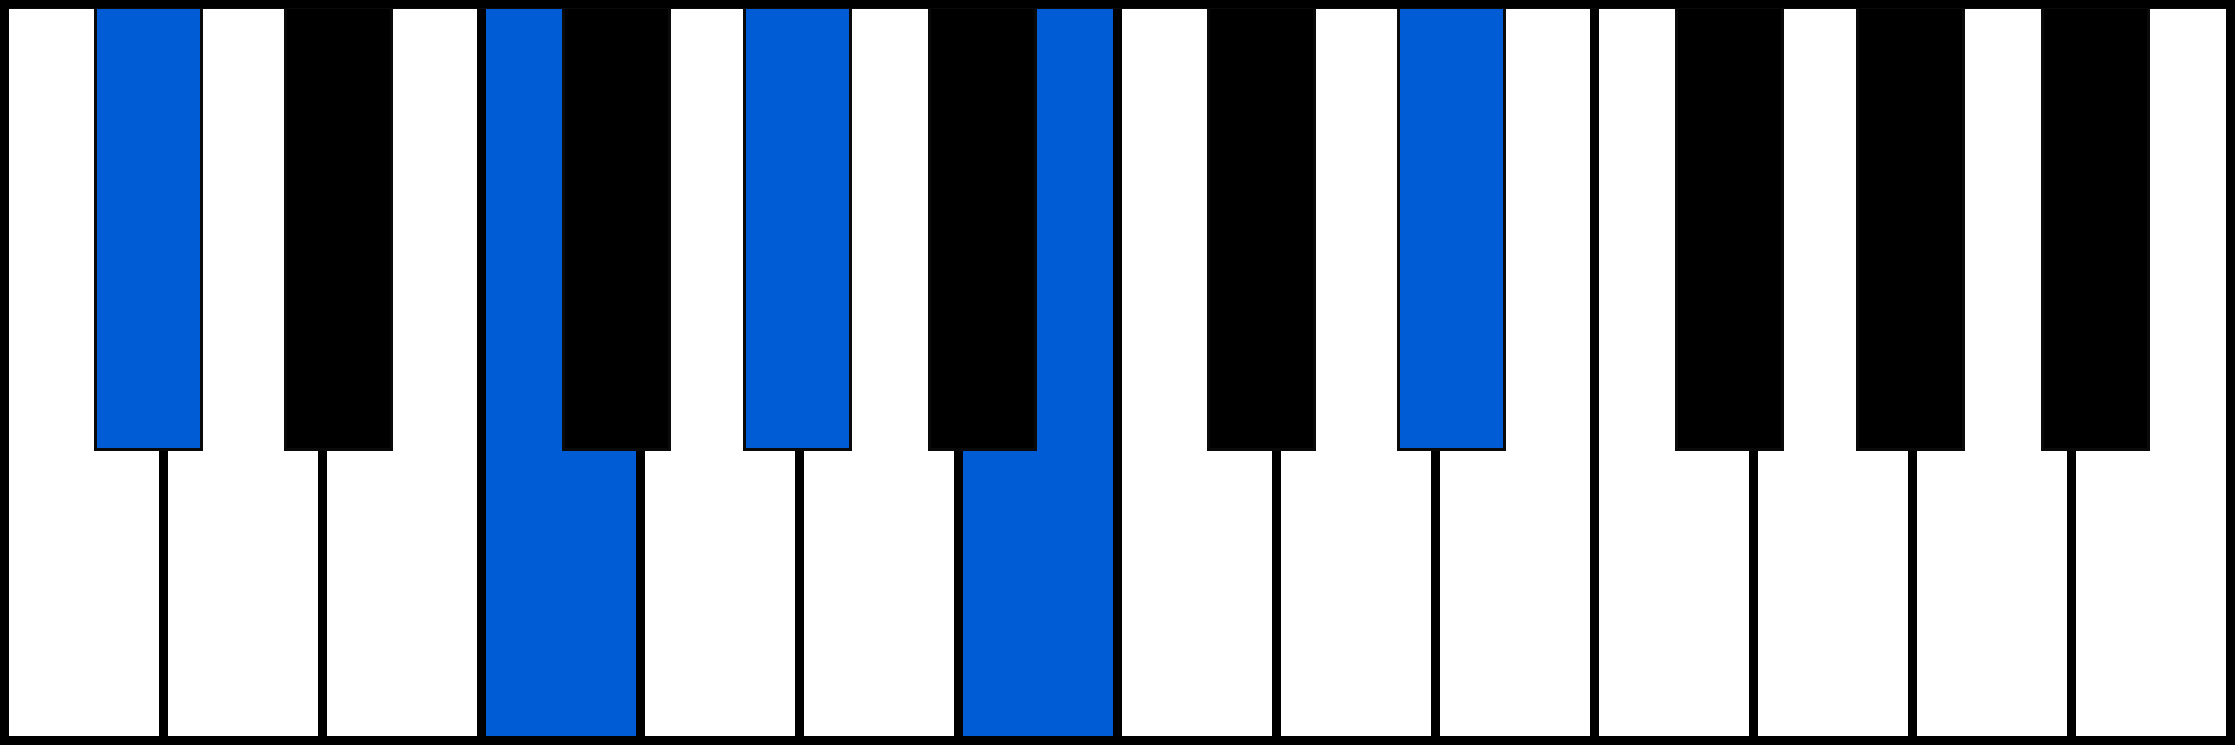 C#9 piano chord fingering